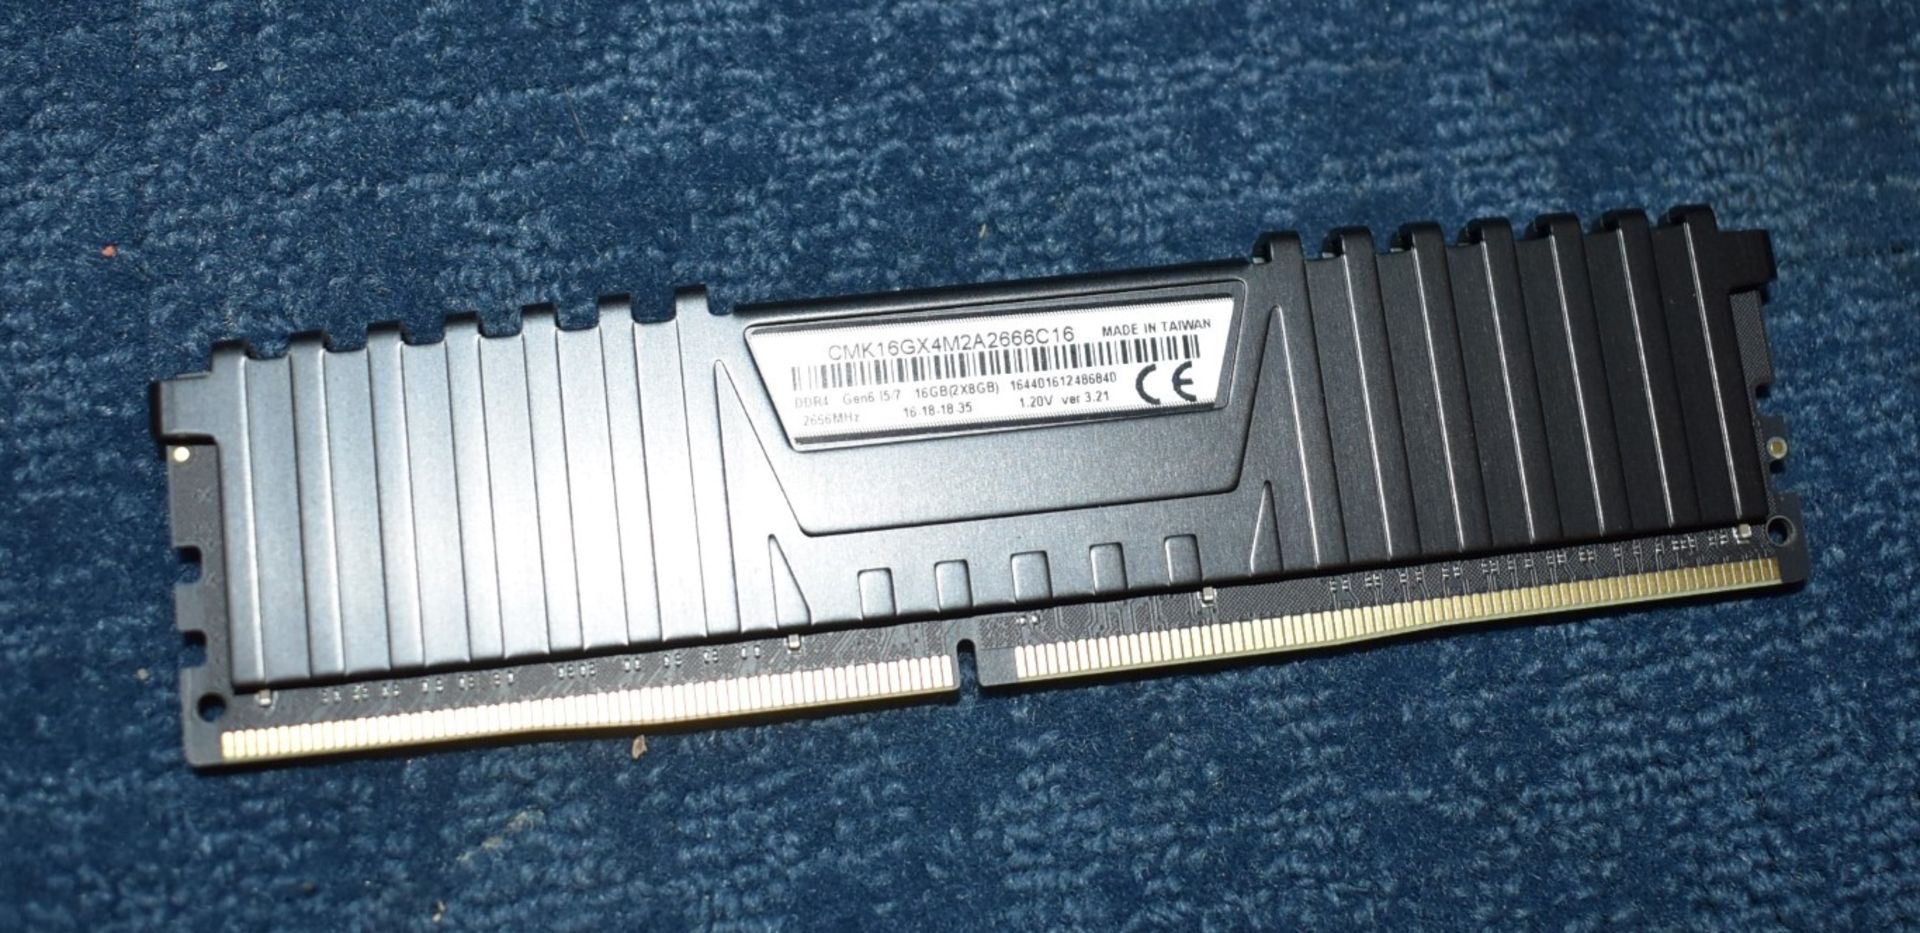 1 x Desktop PC Server Featuring an Intel i7-6700 Processor, 16gb DDR4 Ram, BeQuiet 500w PSU - Image 10 of 10